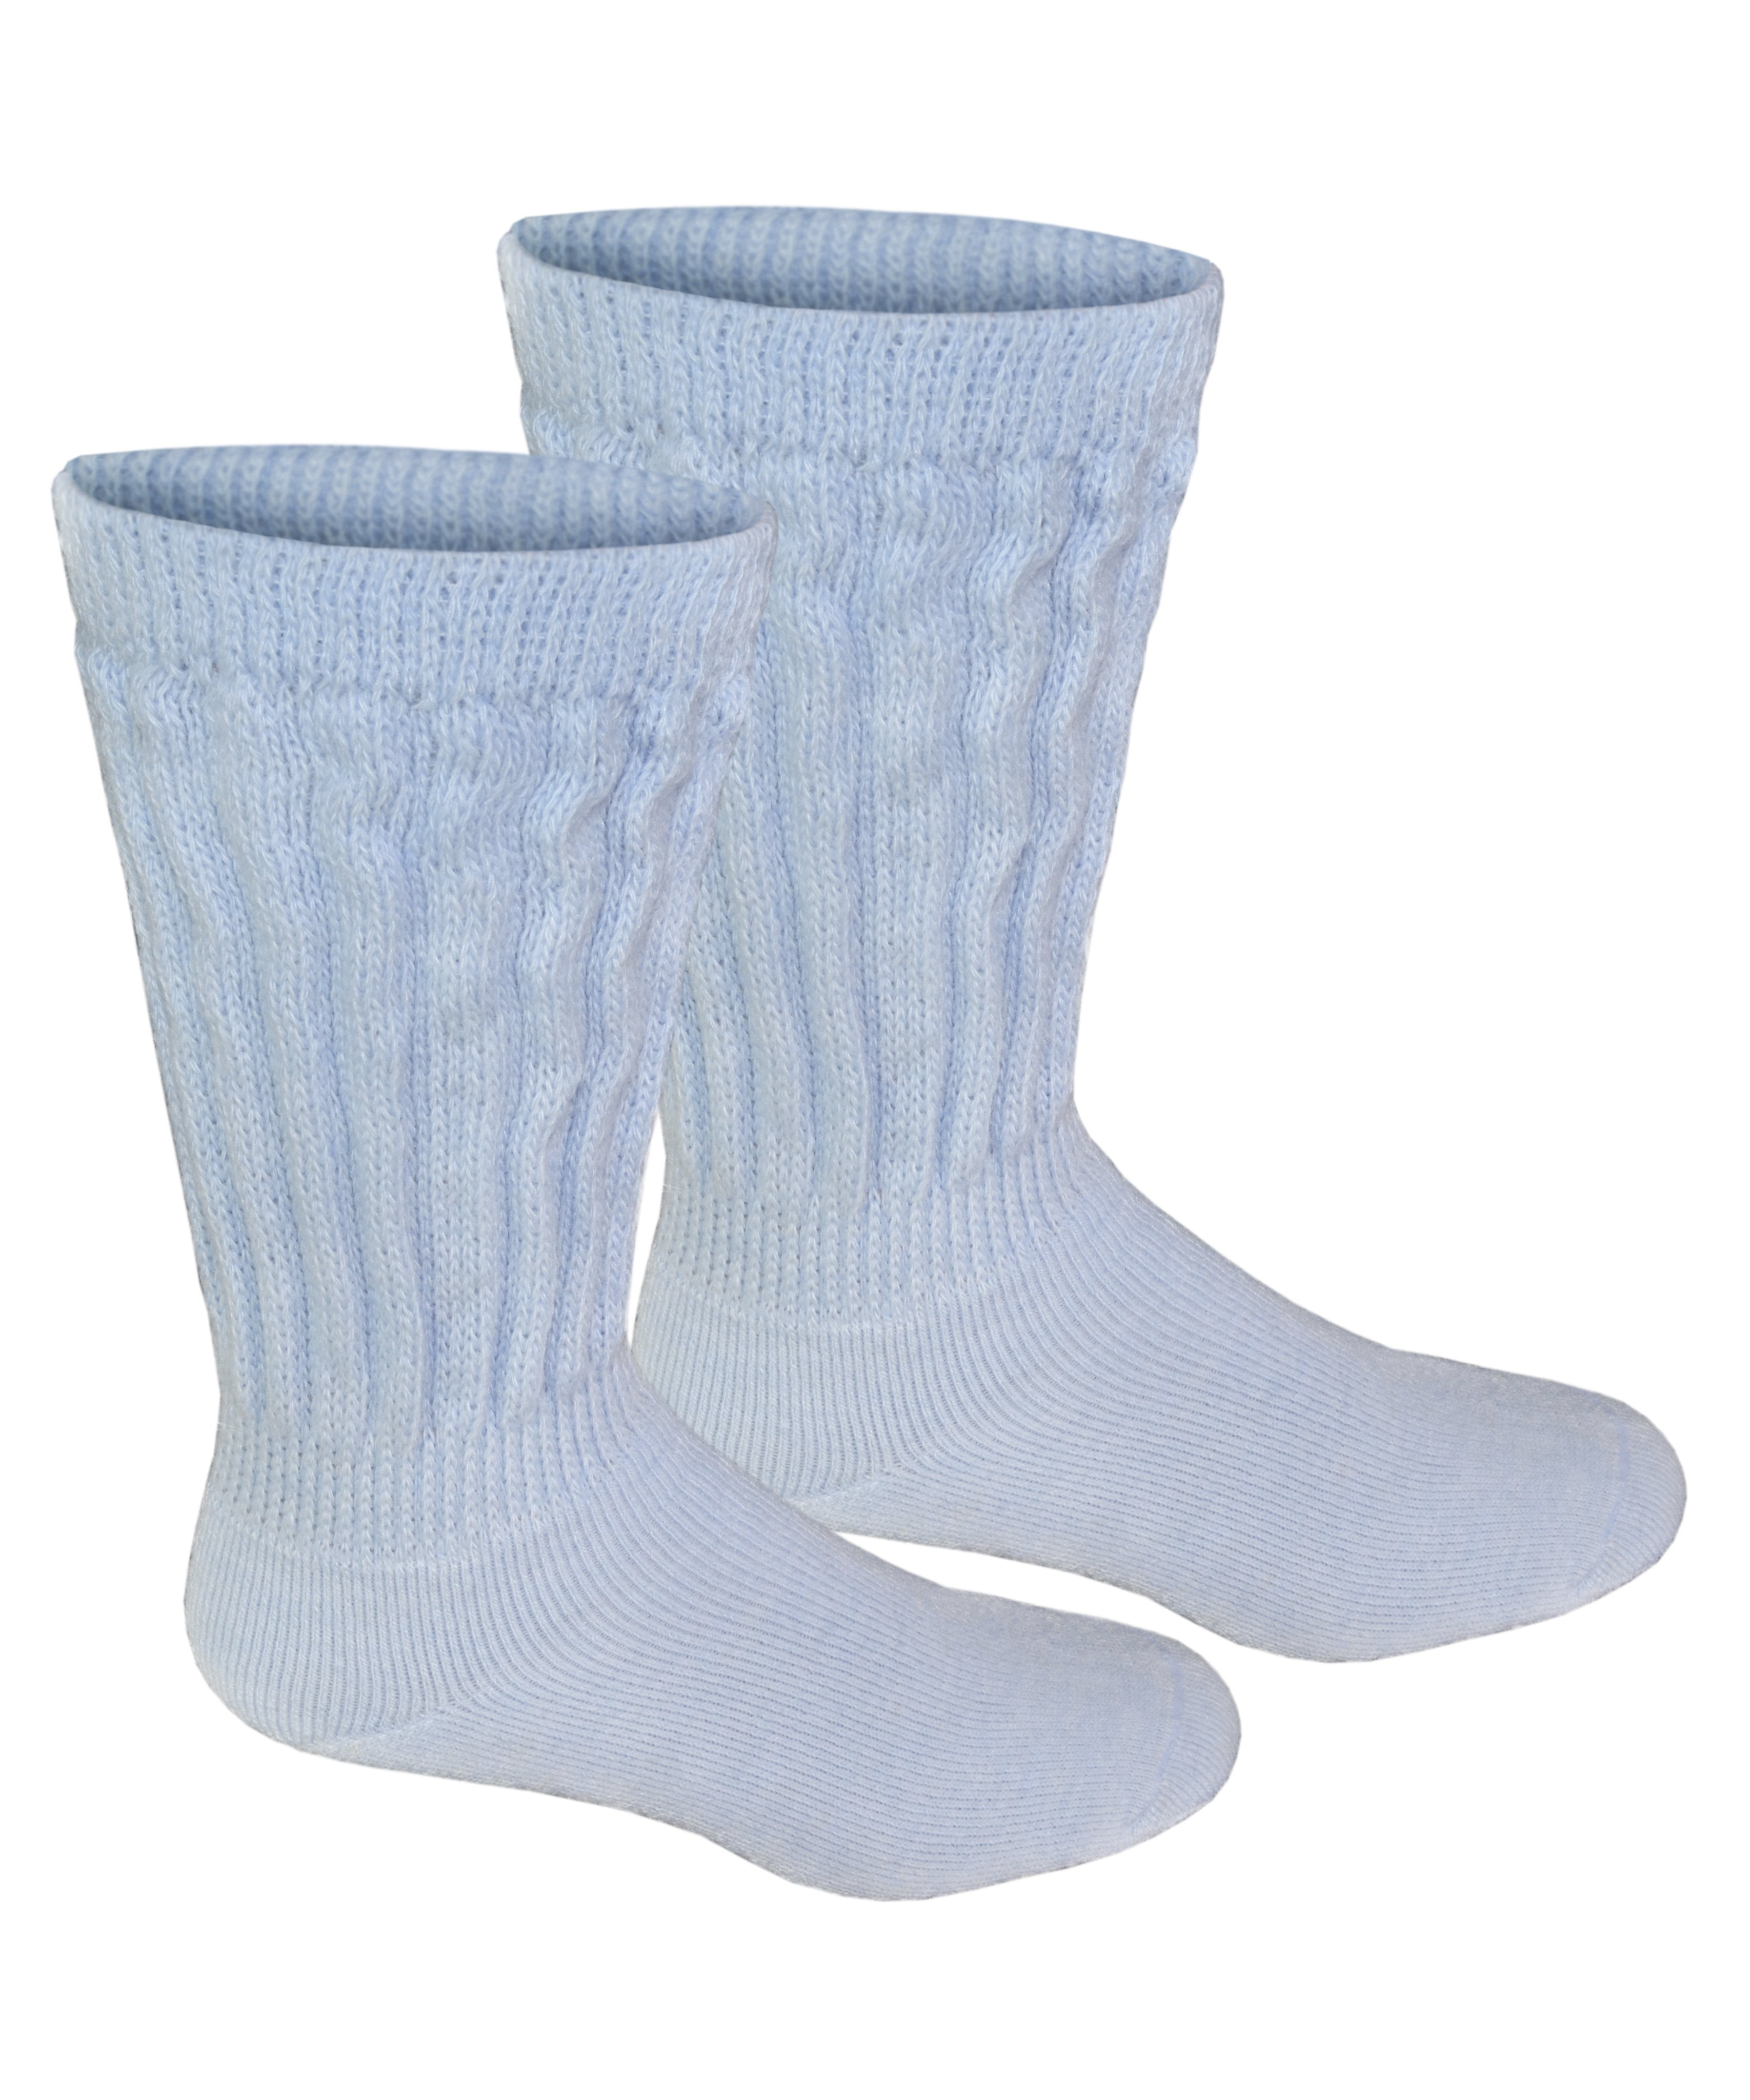 Alpaca Repeating Pattern Womens Cotton Socks Mens Novelty Crew Socks Athletic Knee High Casual Socks 